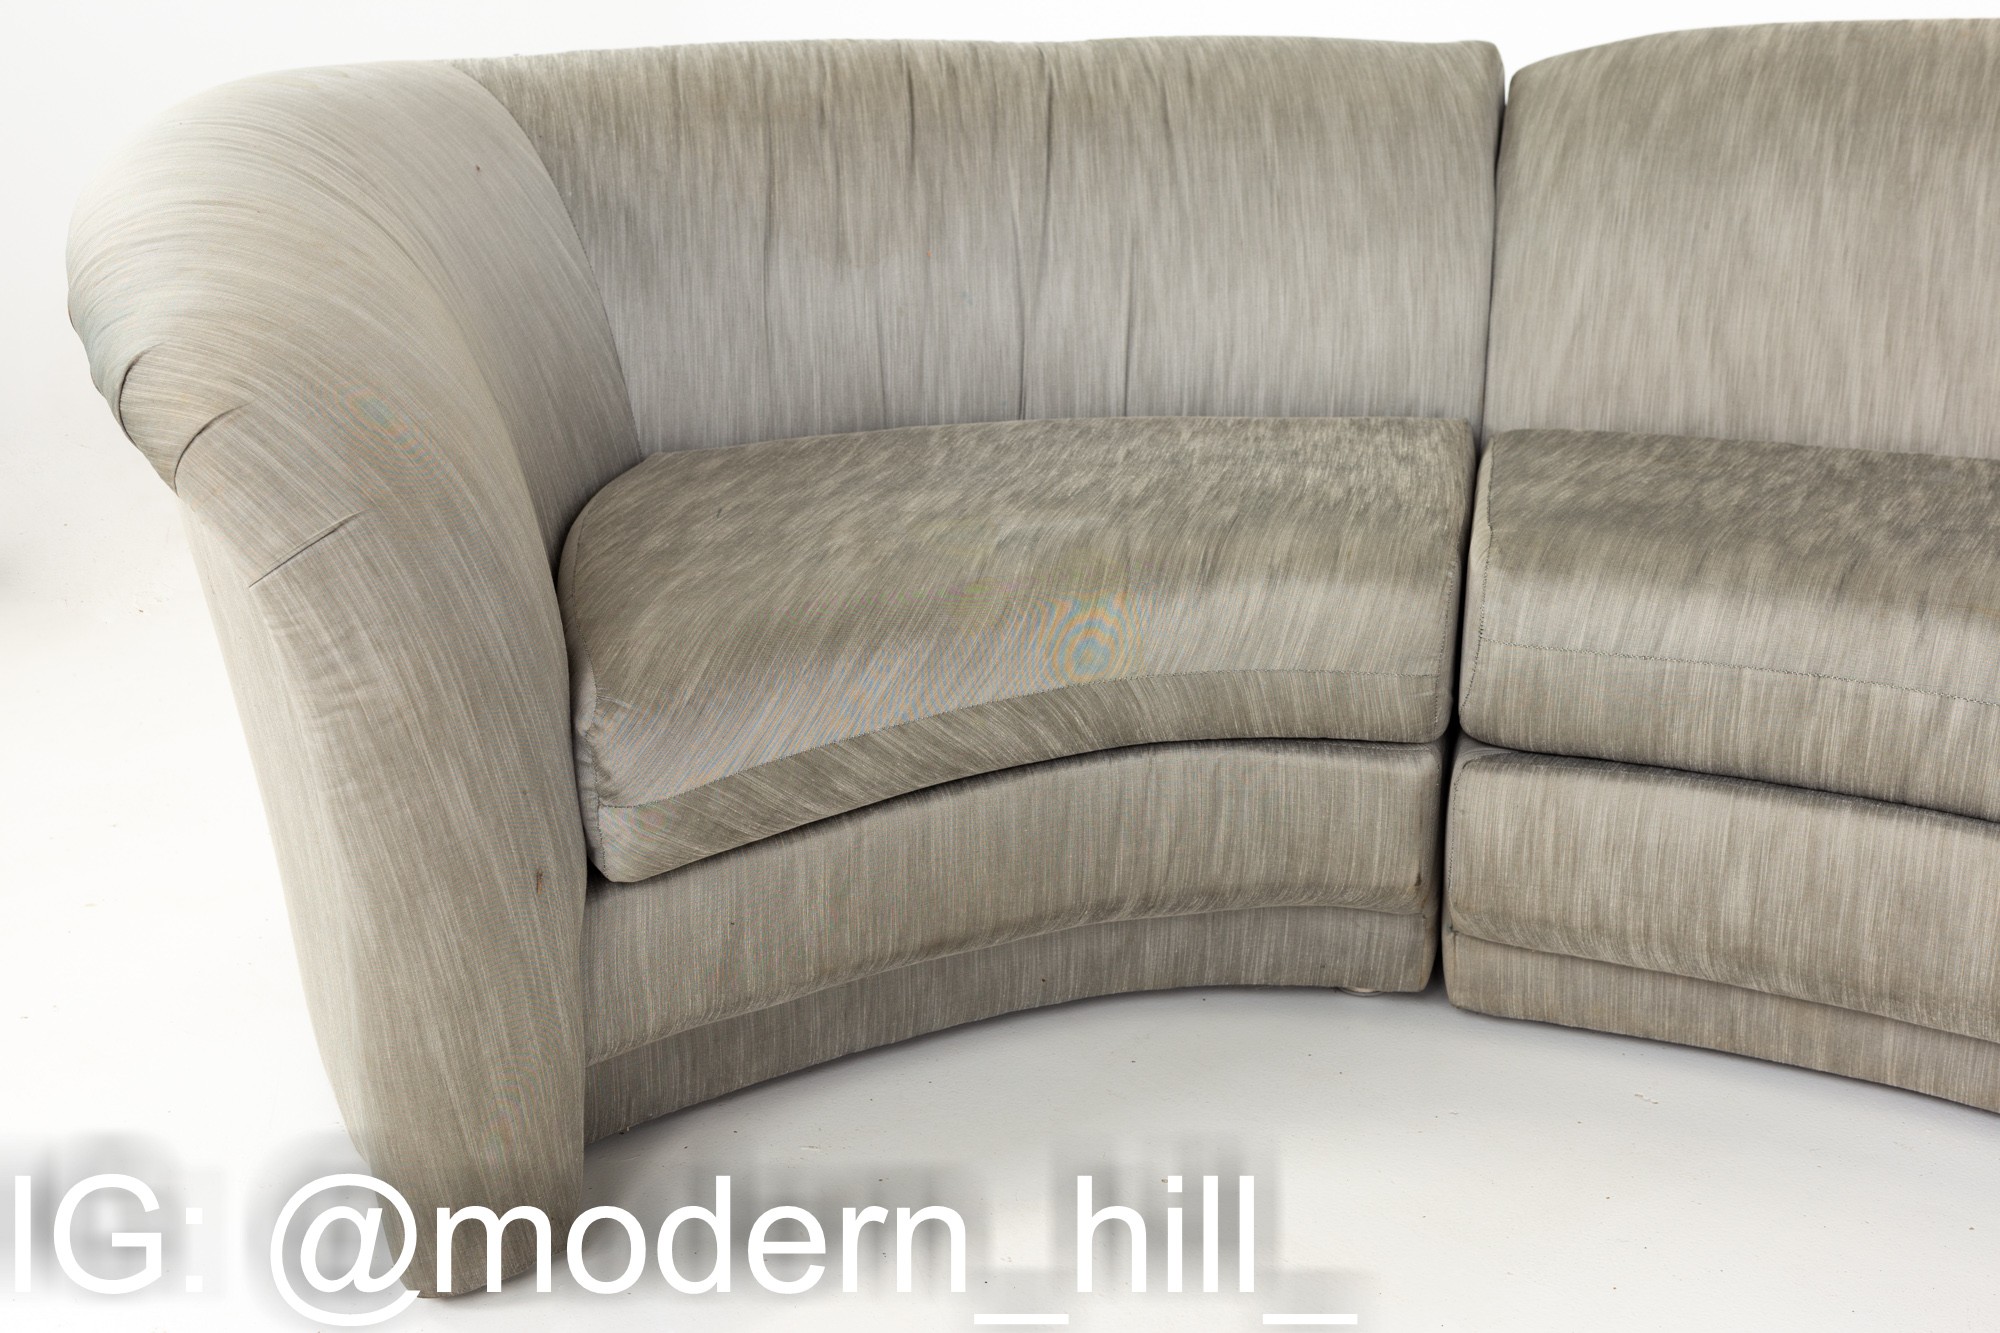 Thayer Coggin Mid Century Circular Sectional Sofa